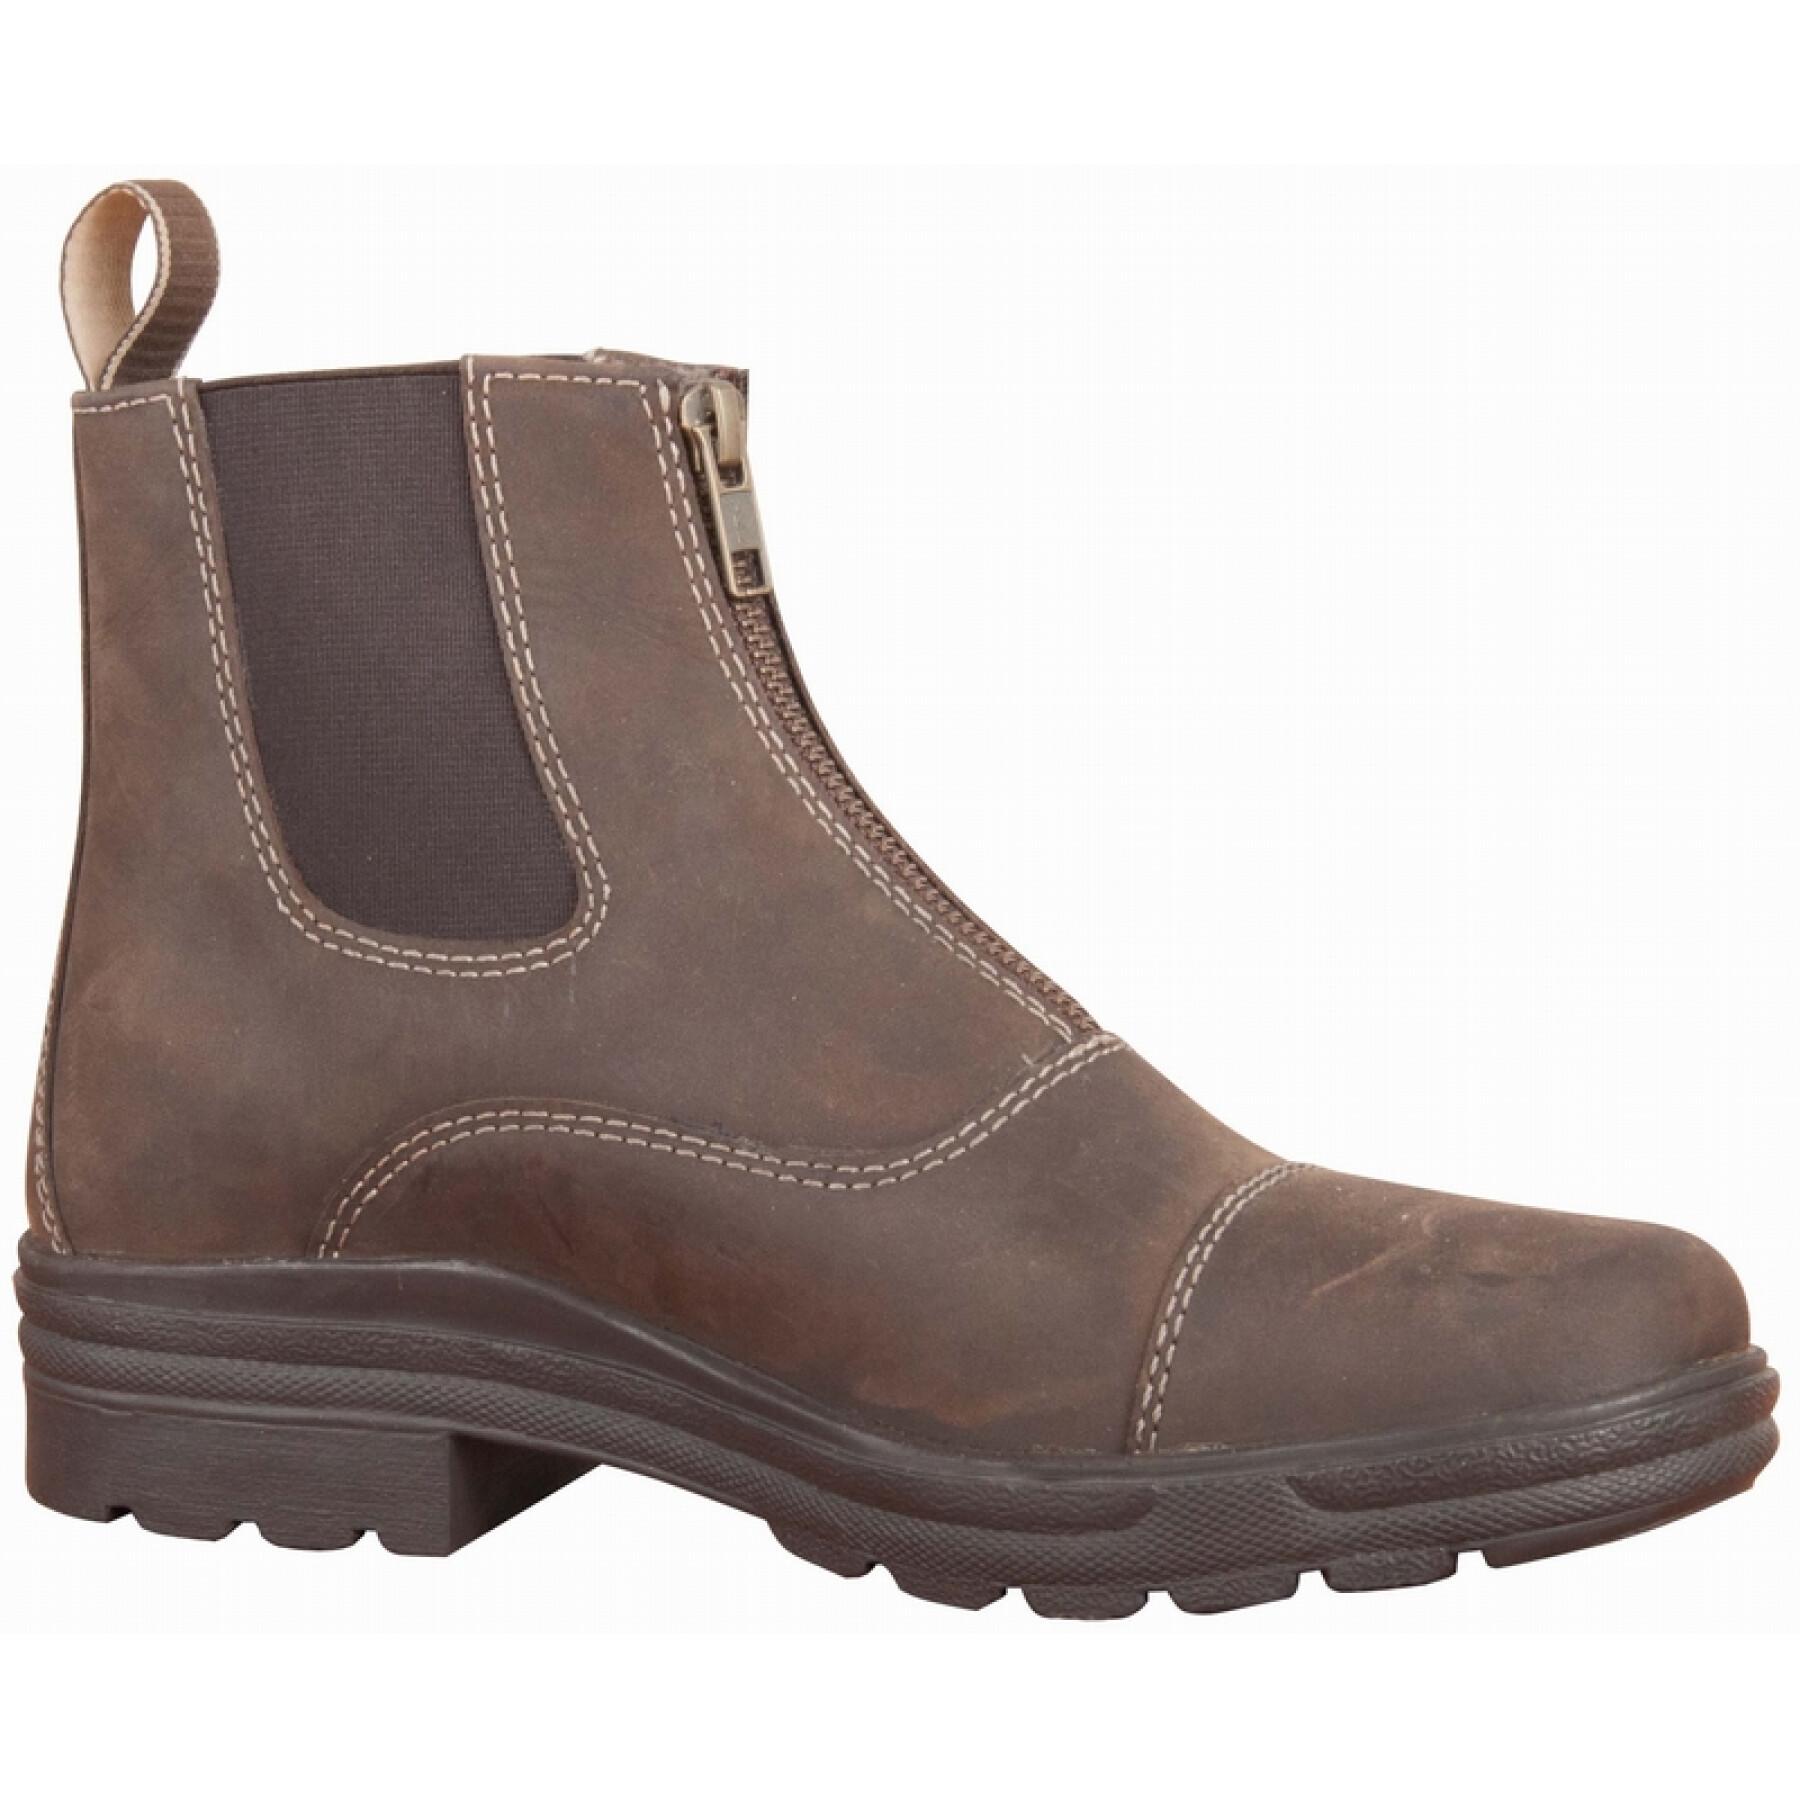 Oiled leather riding boots T de T Leoni